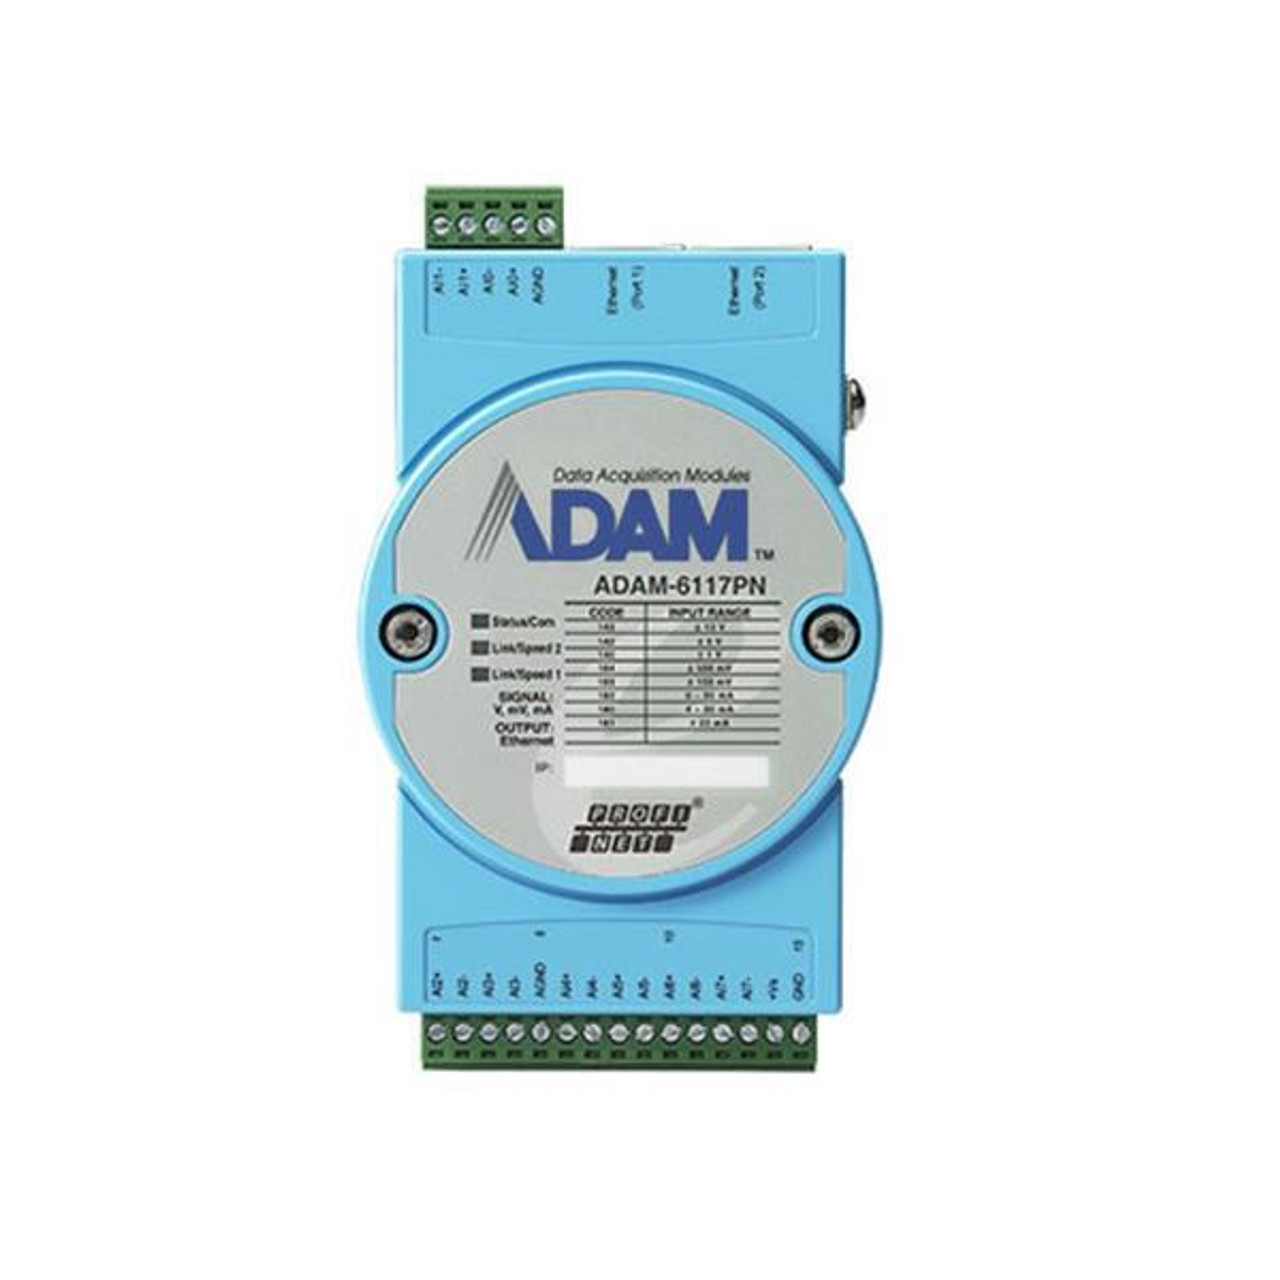 ADAM-6117PN-AE Advantech 8-Channel Isolated Analog Input PROFINET Module 2 x Network (RJ-45) Fast Ethernet